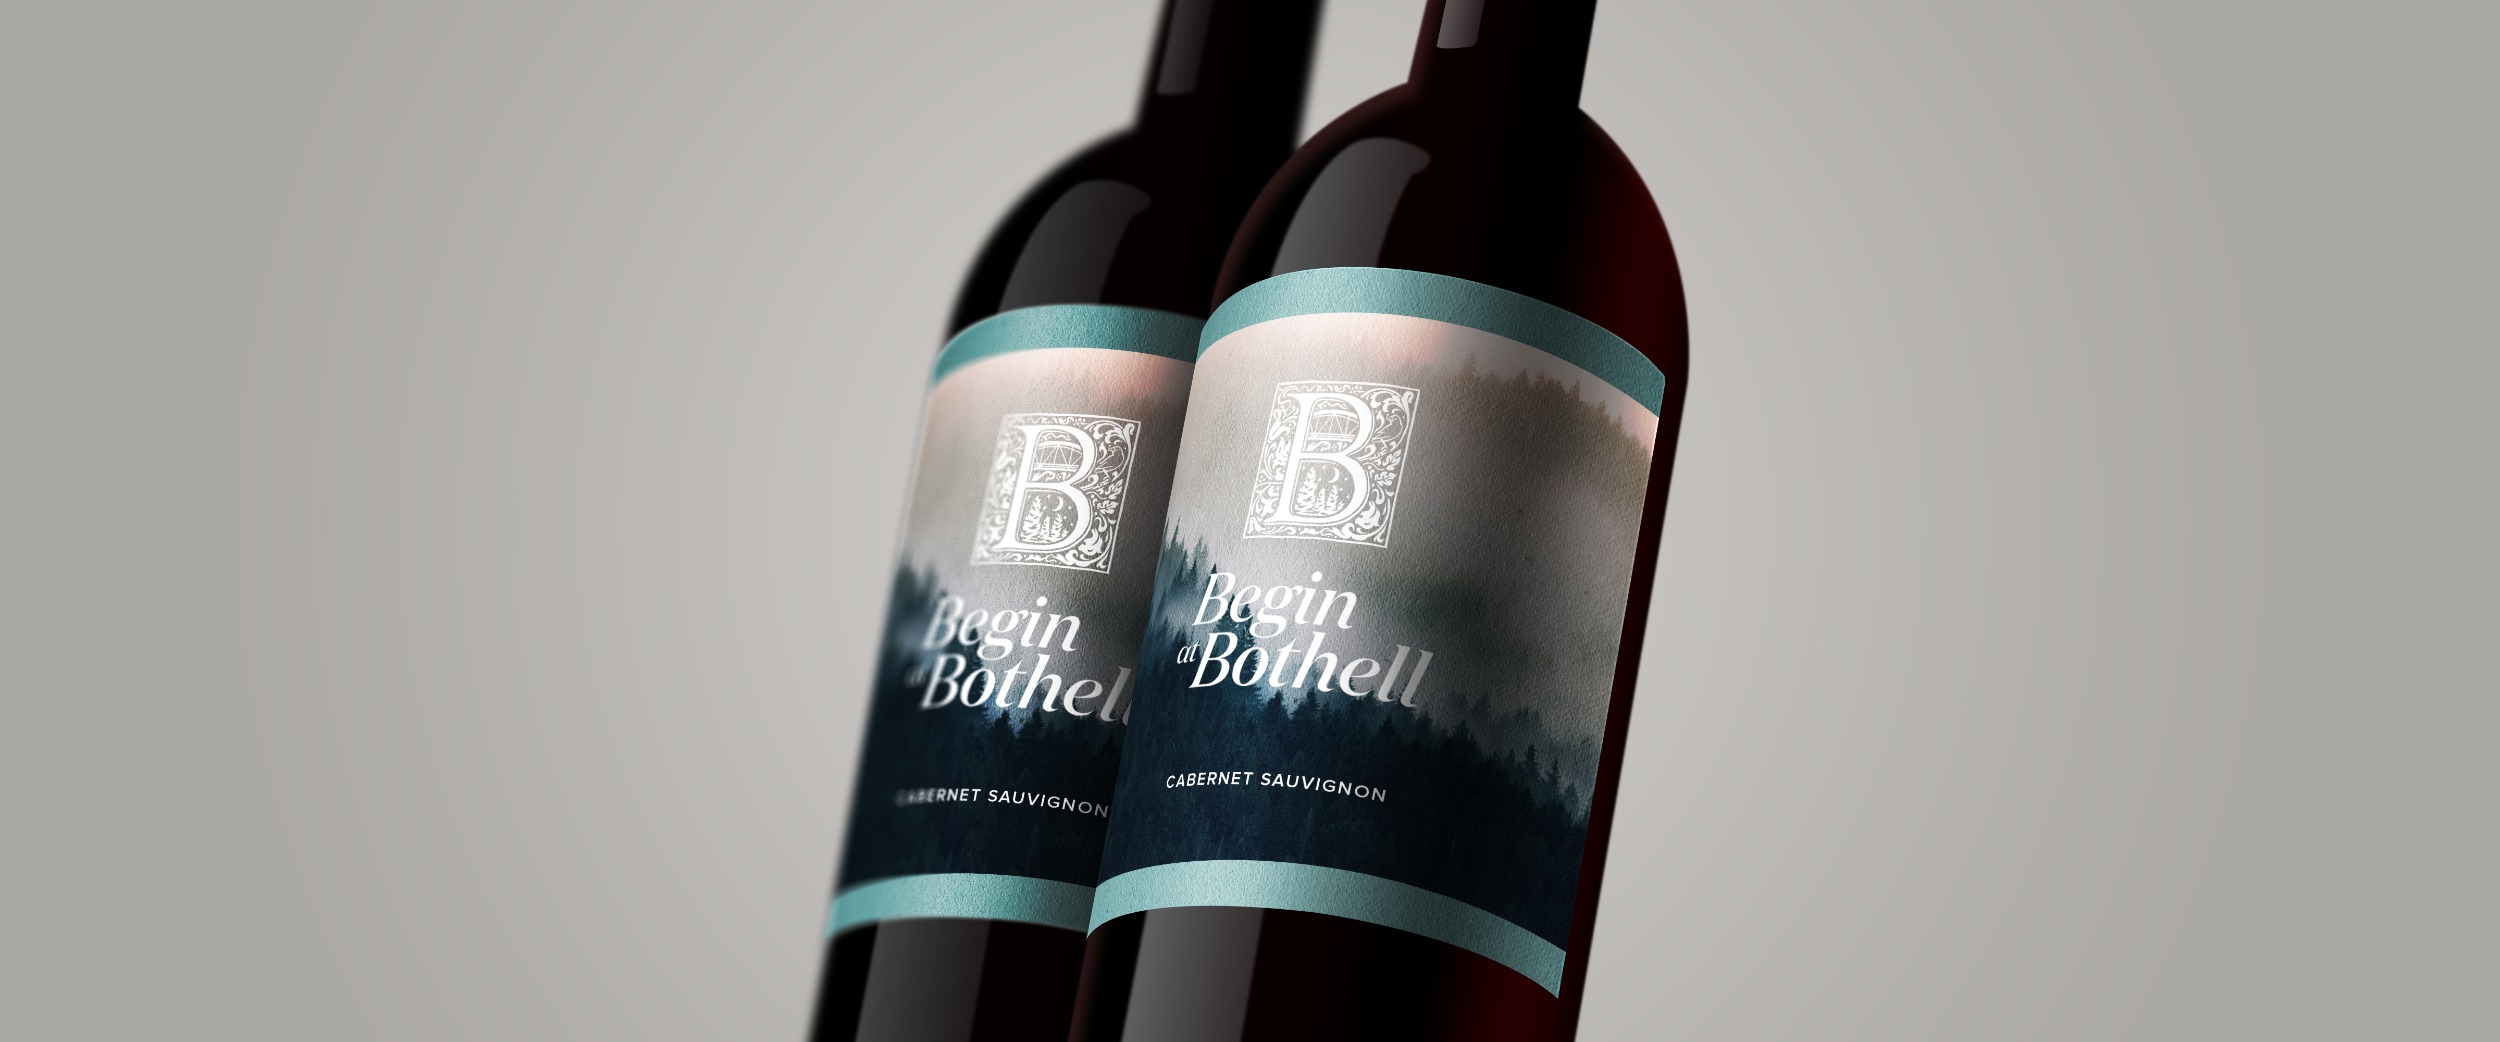 begin at bothell wine bottles